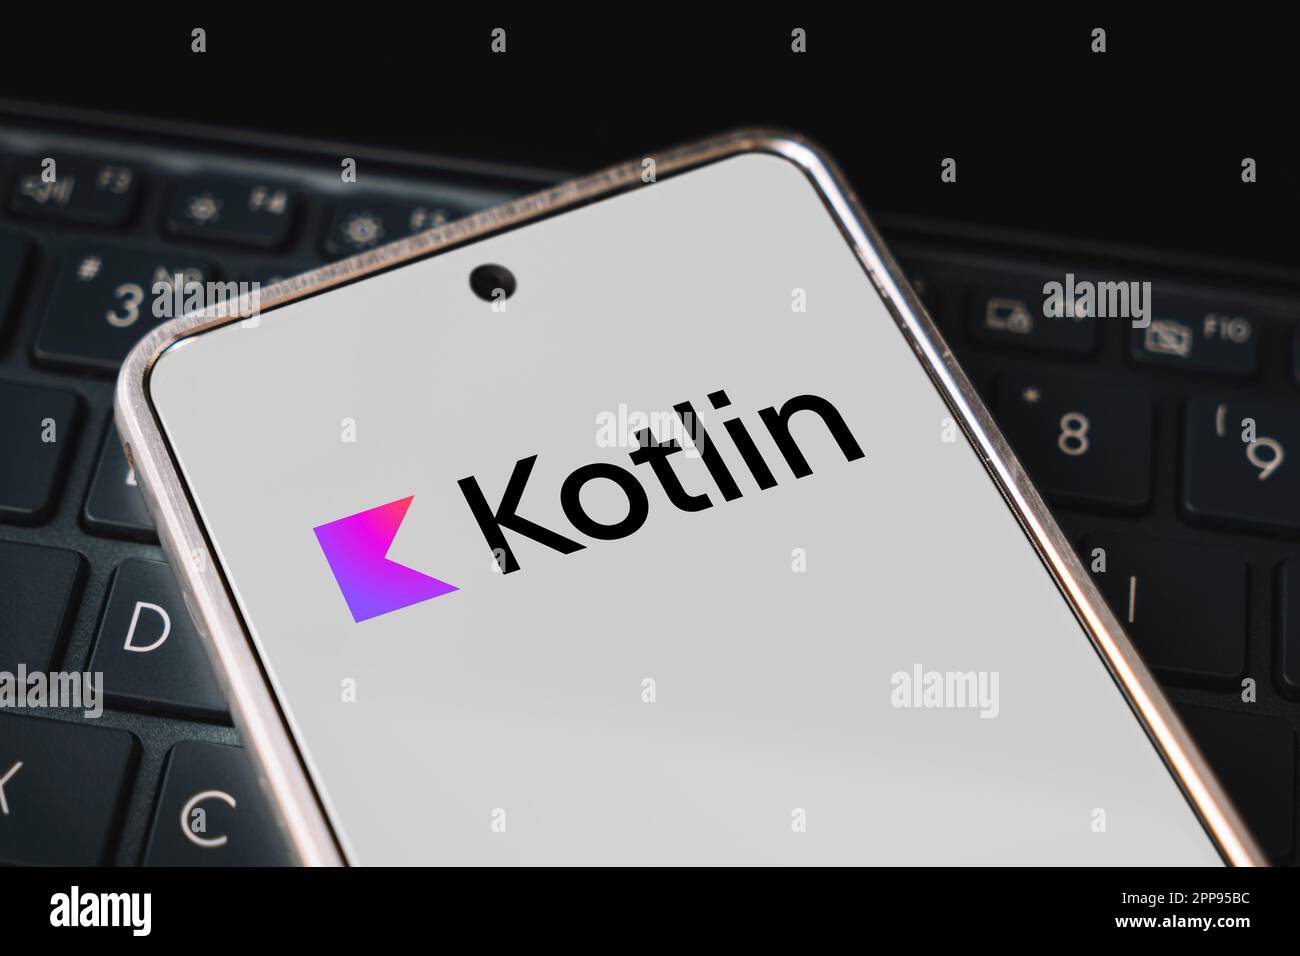 kotlin Programming language for mobile development, concept. Smartphone on the laptop keyboard. logo kotlin on the mobile phone screen. Barnaul. Russi Stock Photo